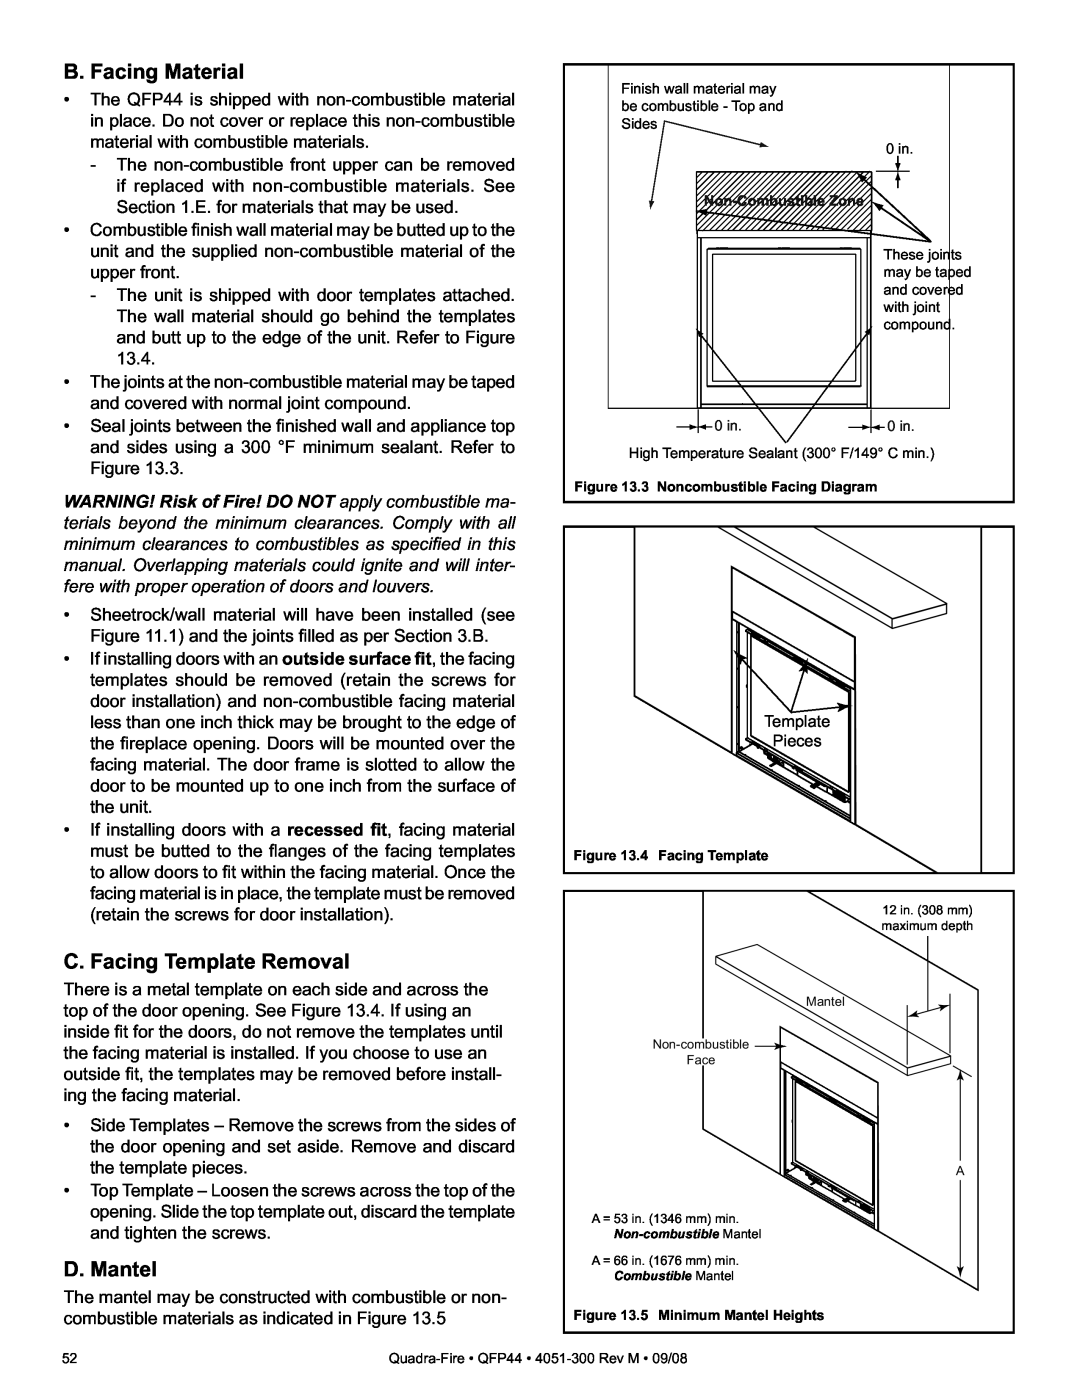 Quadra-Fire QFP44 owner manual B. Facing Material, C. Facing Template Removal, D. Mantel 